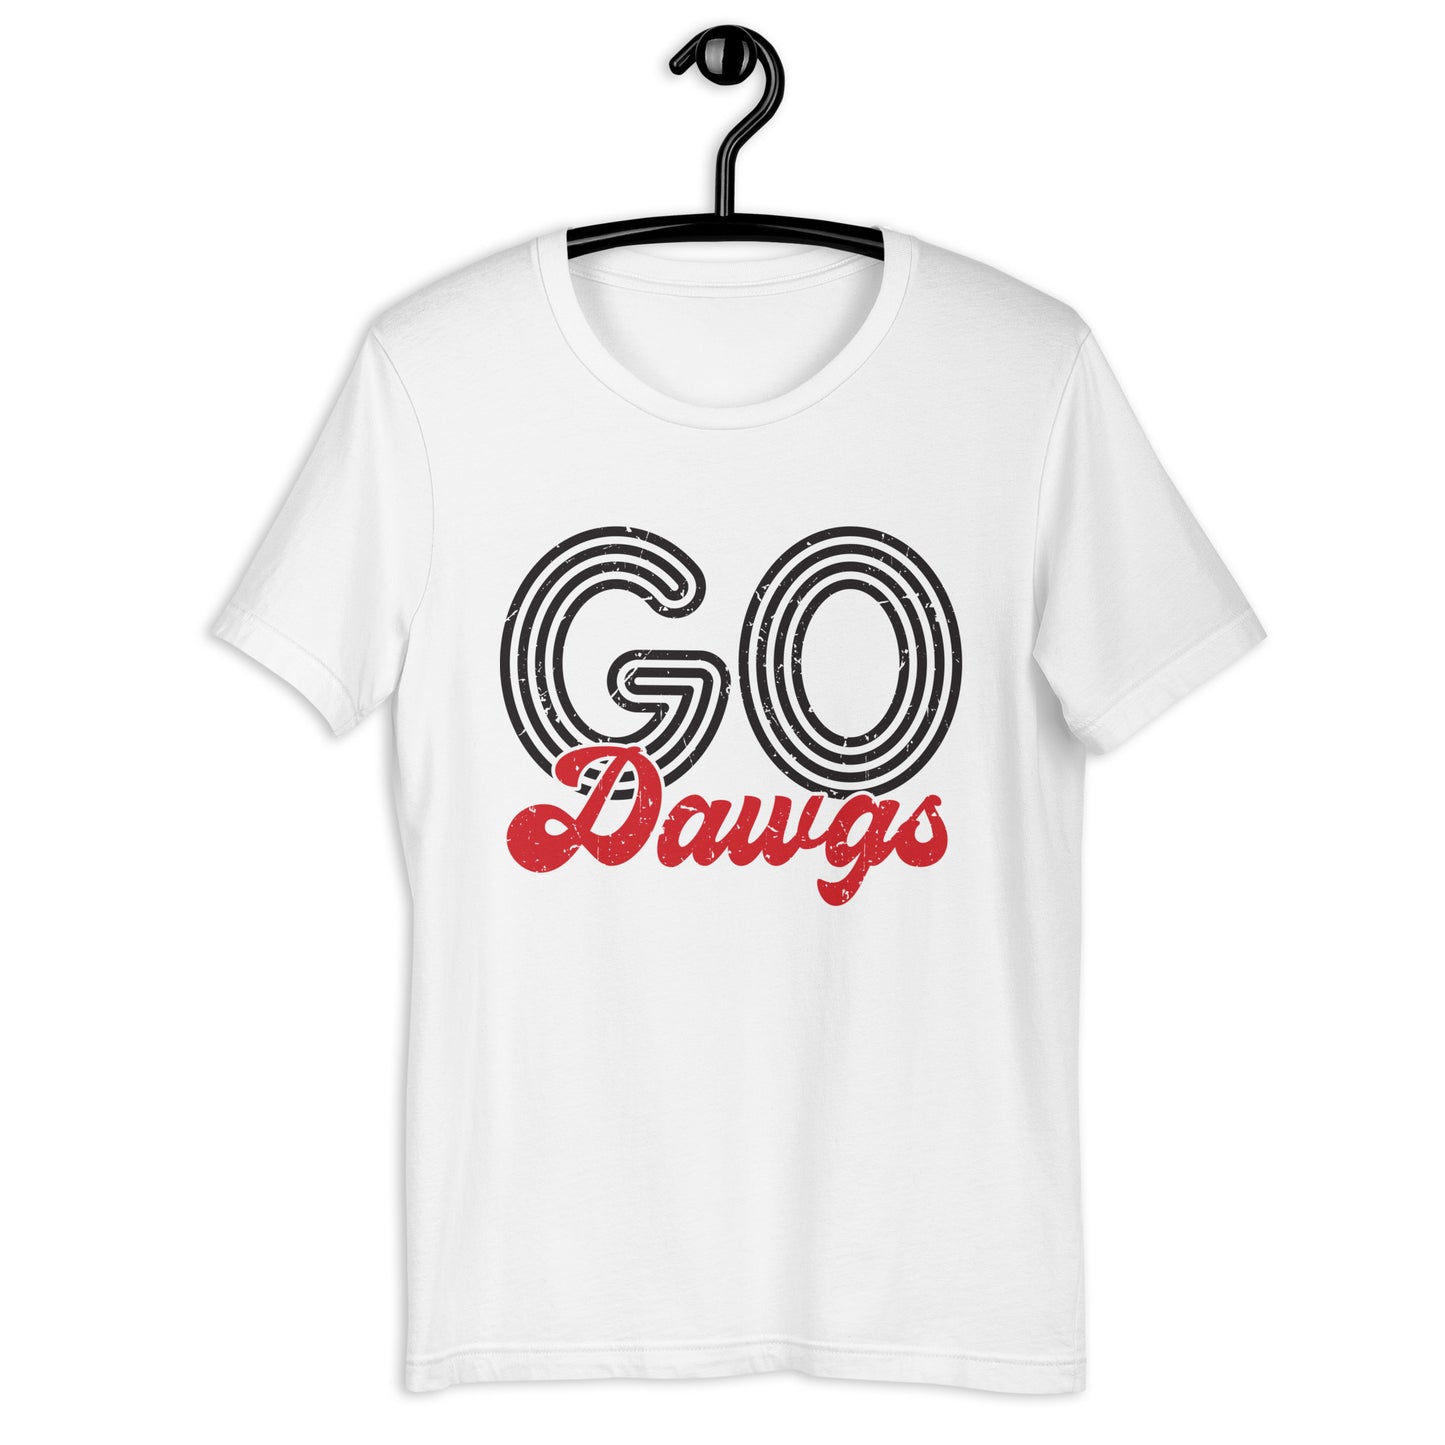 Distressed Go Dawgs t-shirt